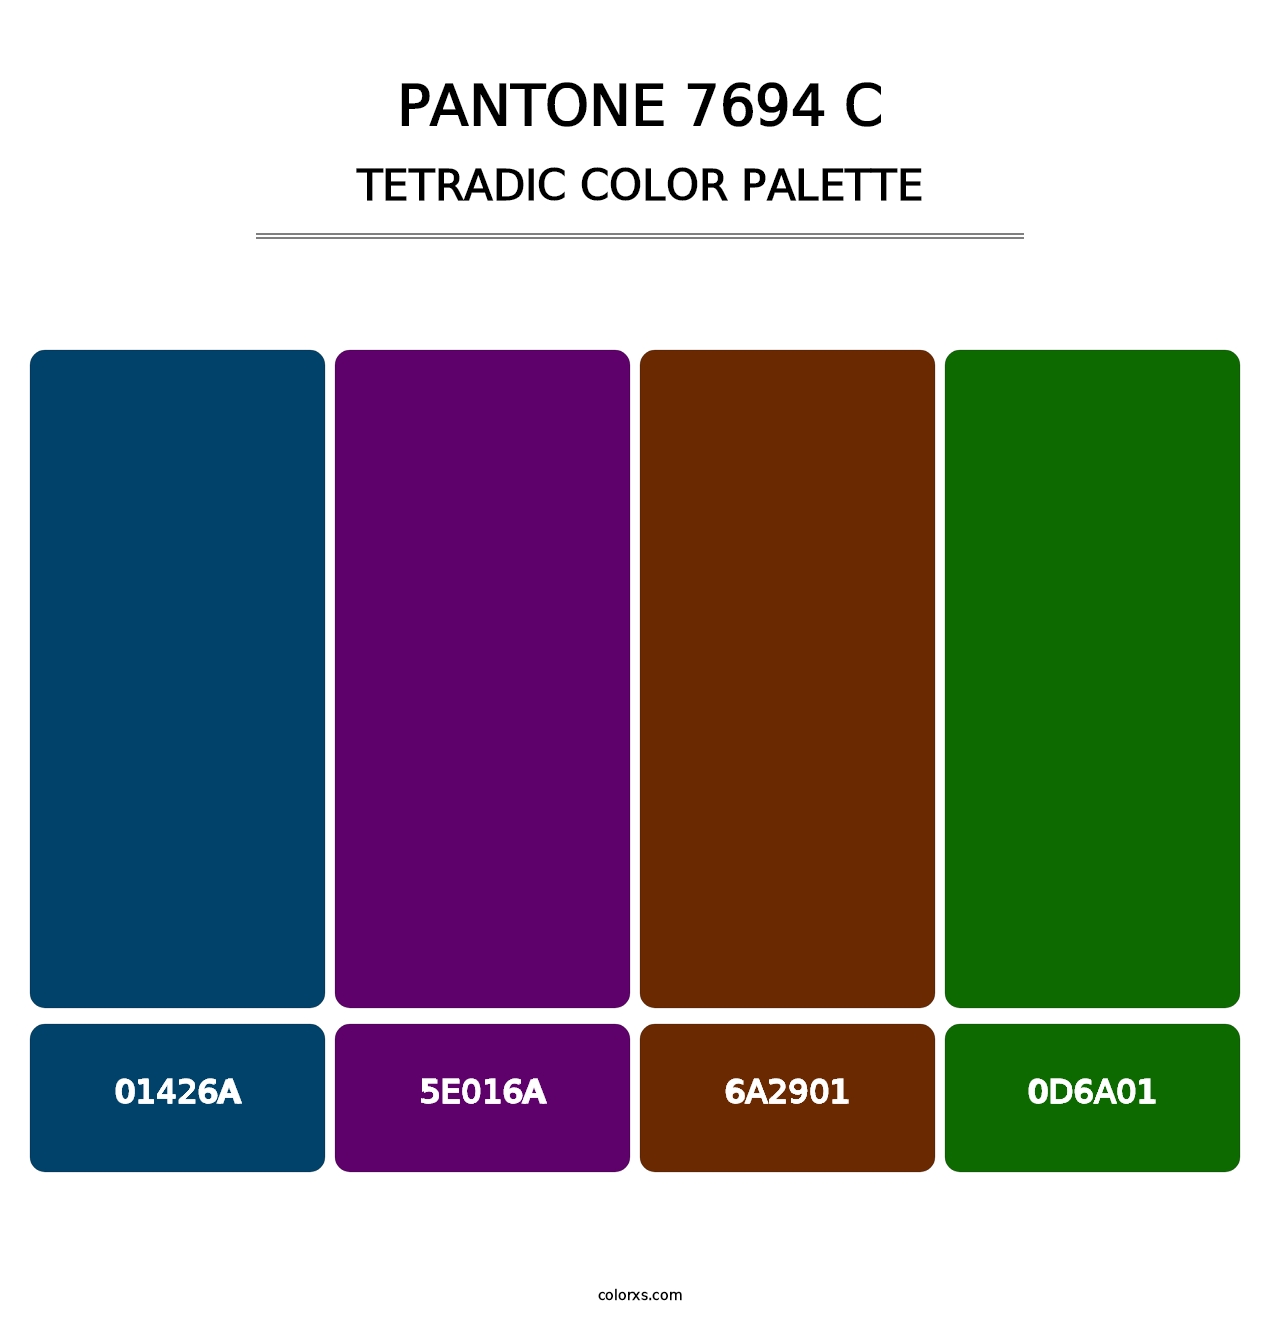 PANTONE 7694 C - Tetradic Color Palette